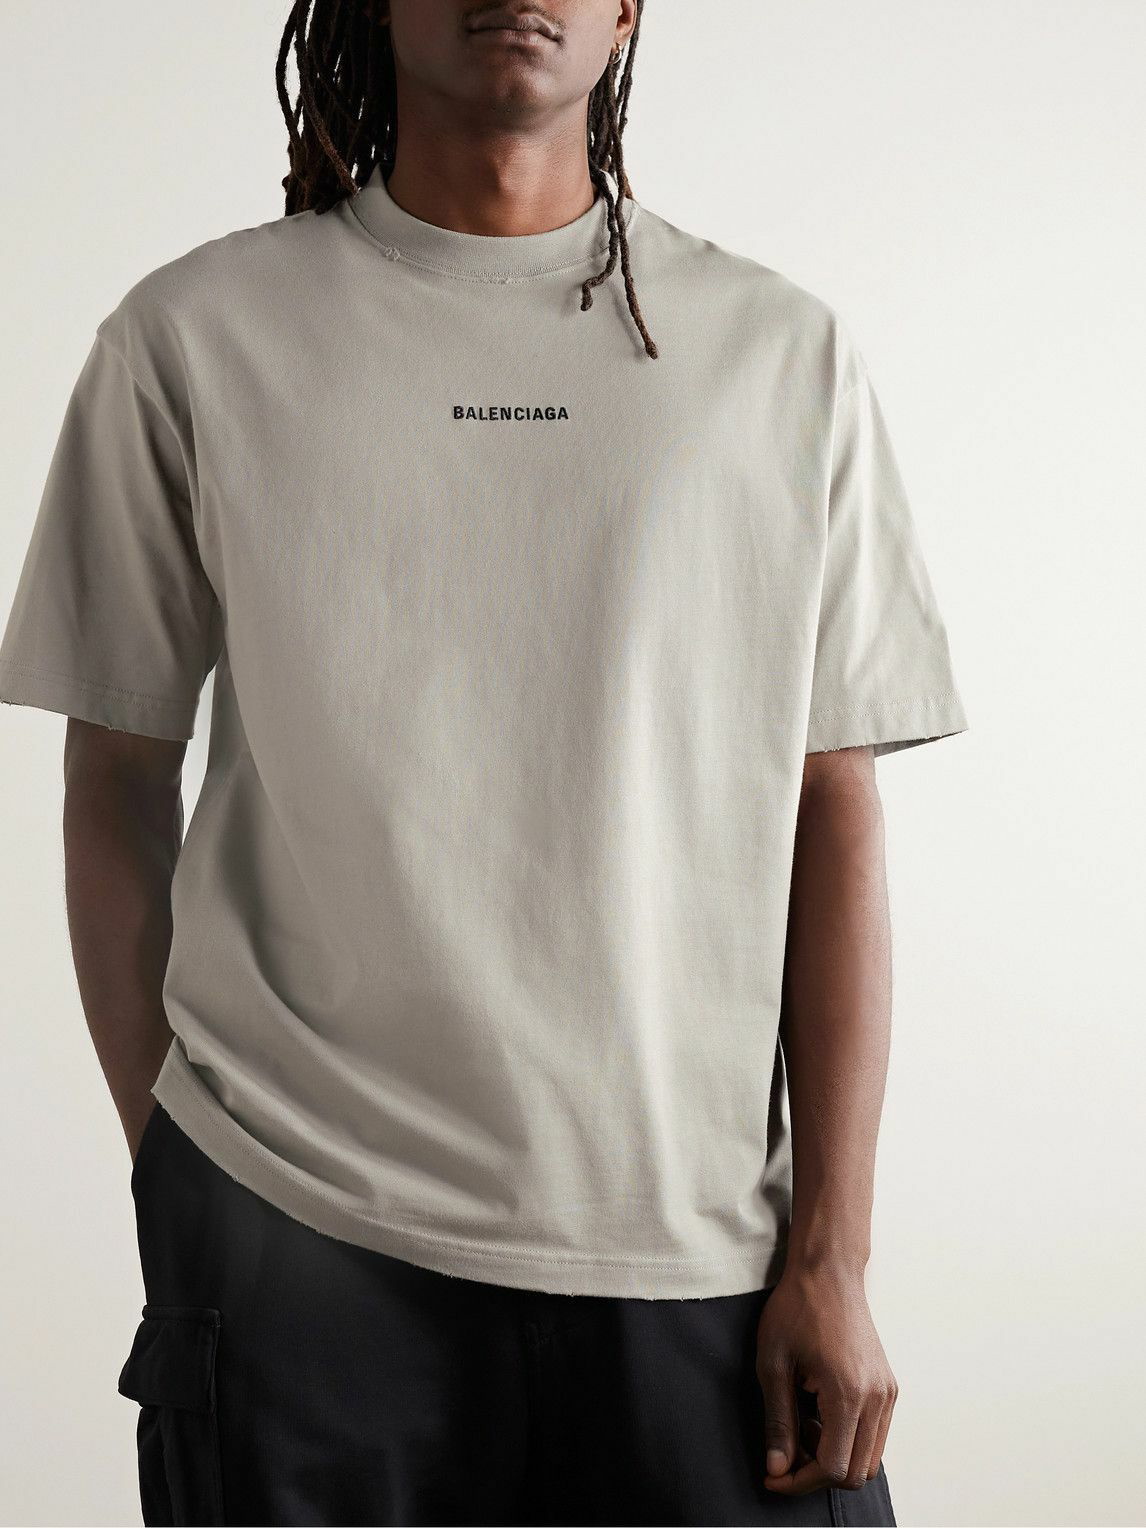 Balenciaga - Oversized Distressed Logo-Print Cotton-Jersey T-Shirt - Black  Balenciaga